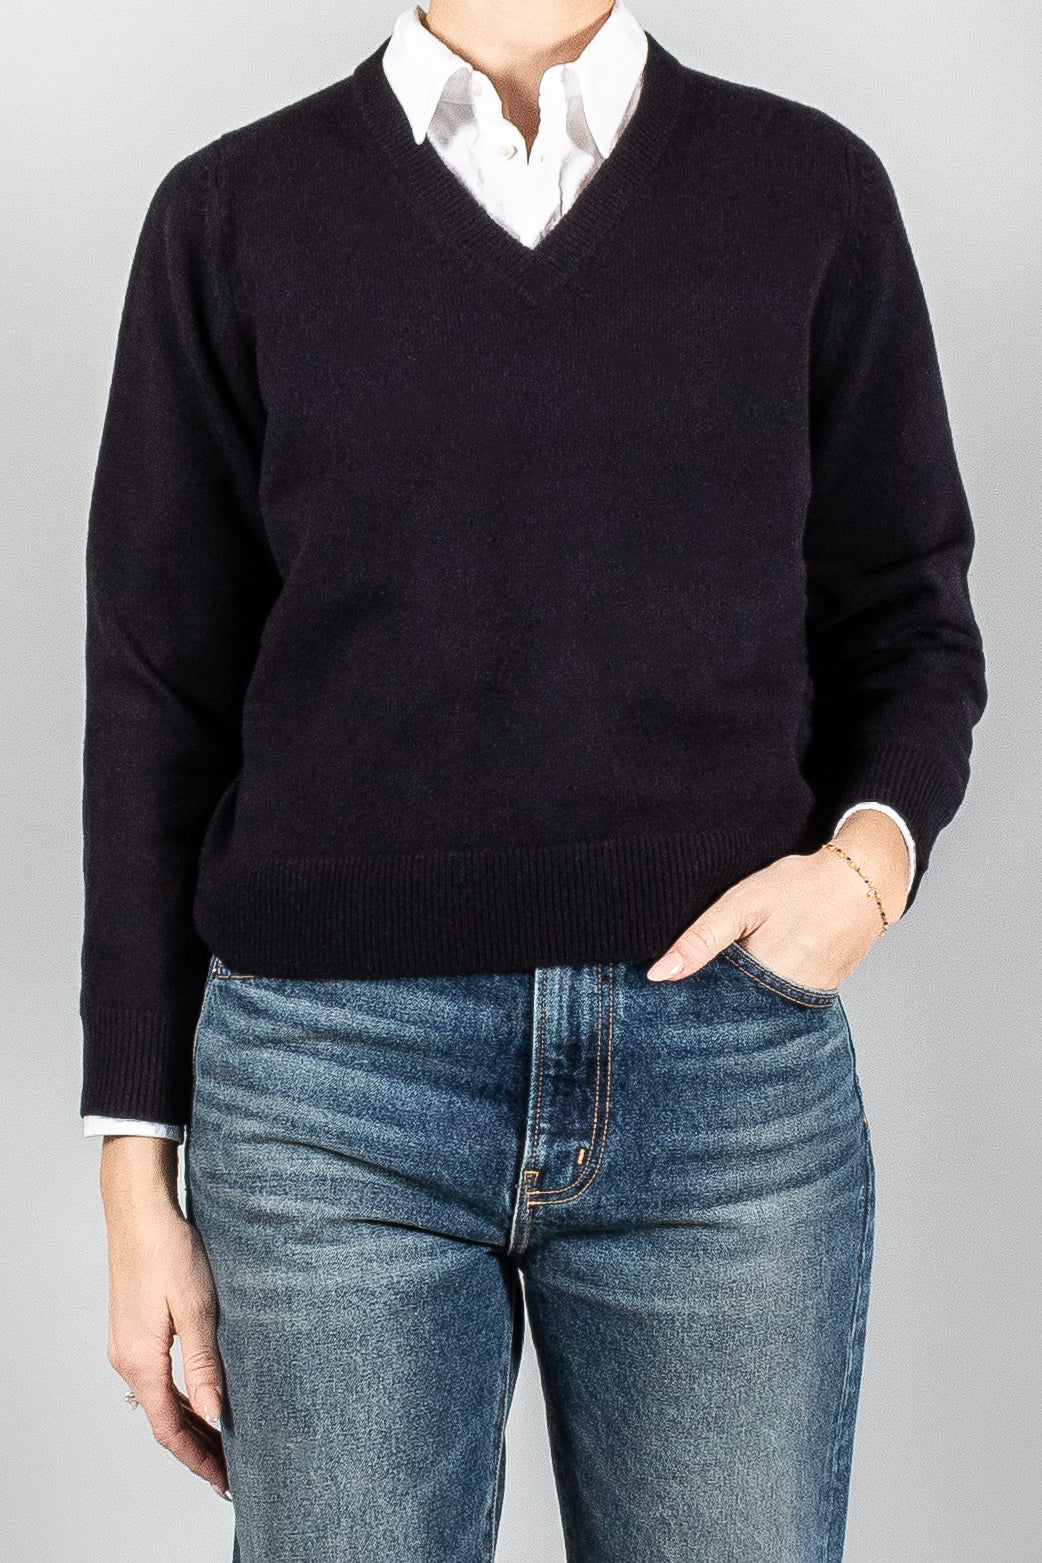 Nili Lotan Priya Cashmere Sweater-Knitwear-Misch-Boutique-Vancouver-Canada-misch.ca